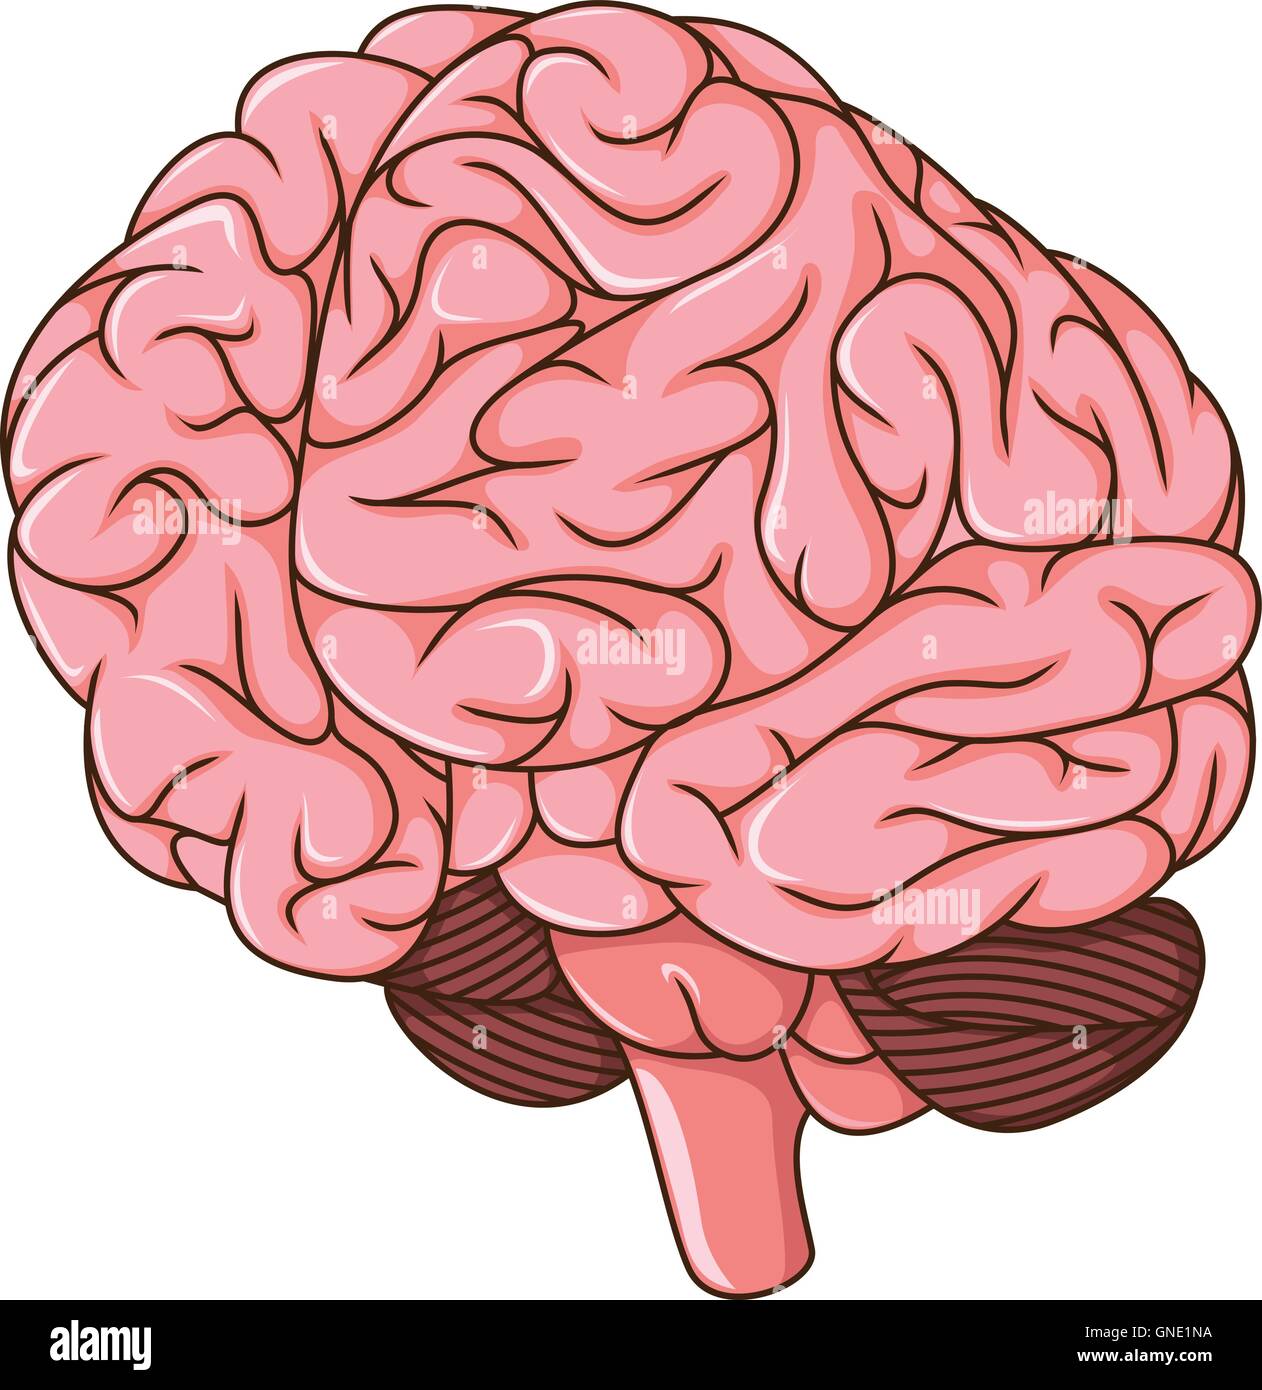 human brain clots cartoon Stock Vector